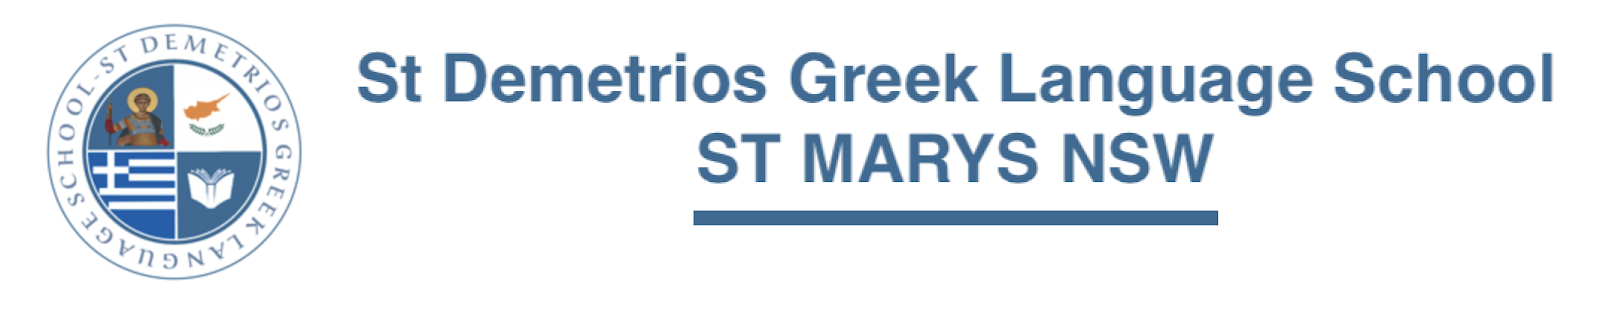 St Demetrios Greek Language School